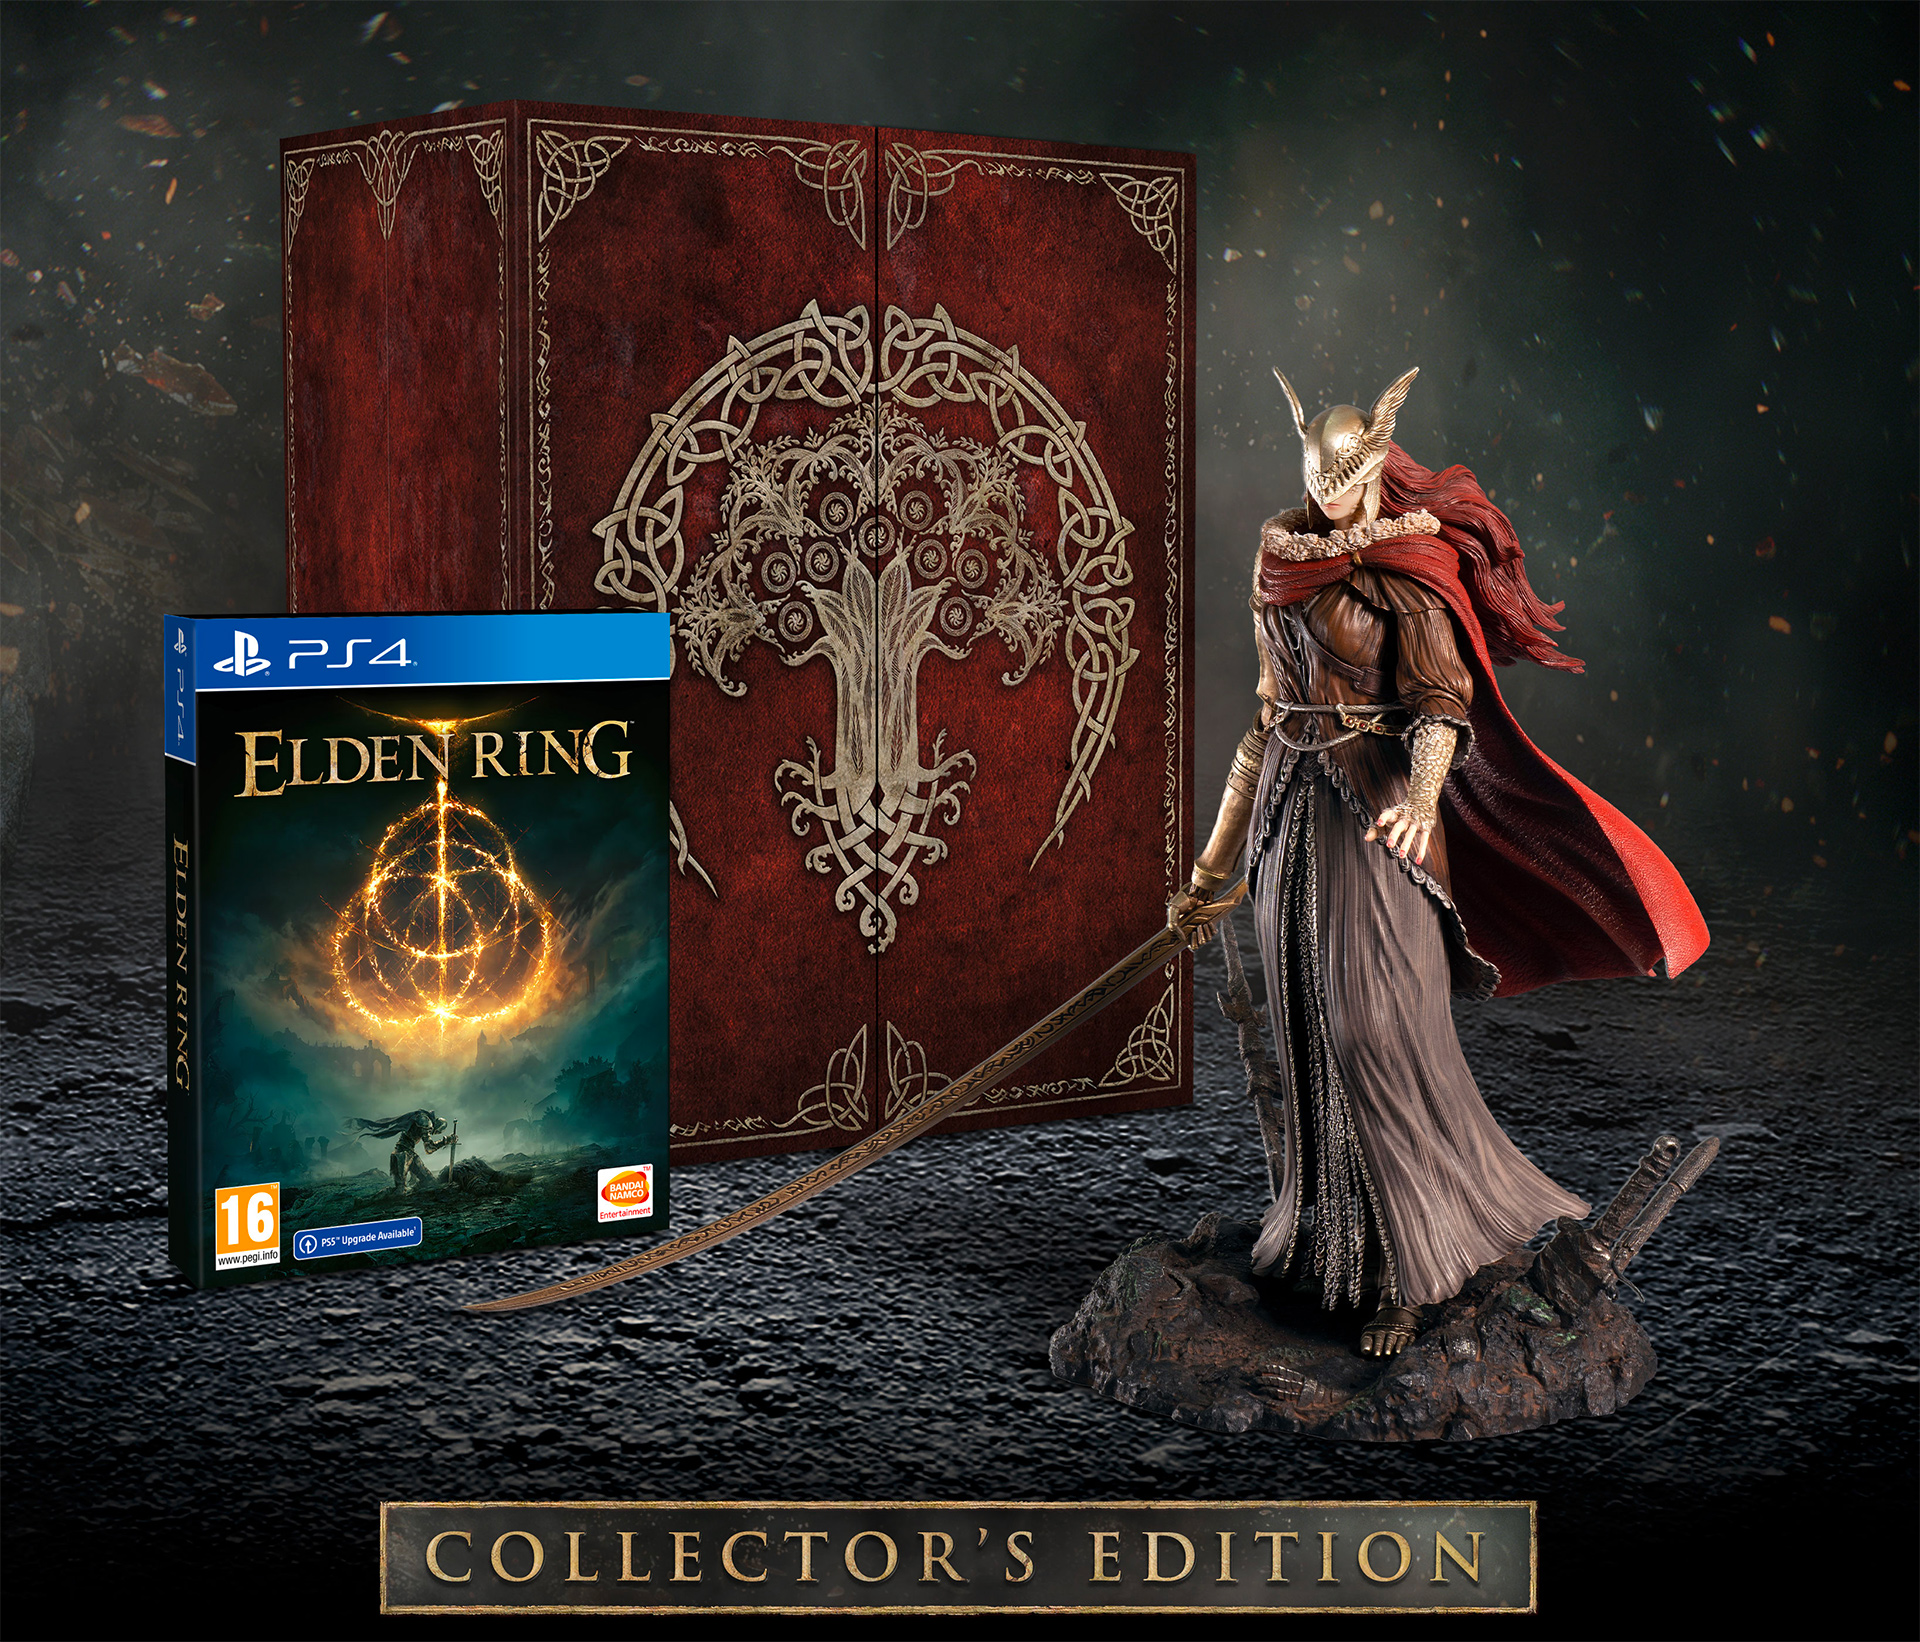 Elden Ring collector's edition